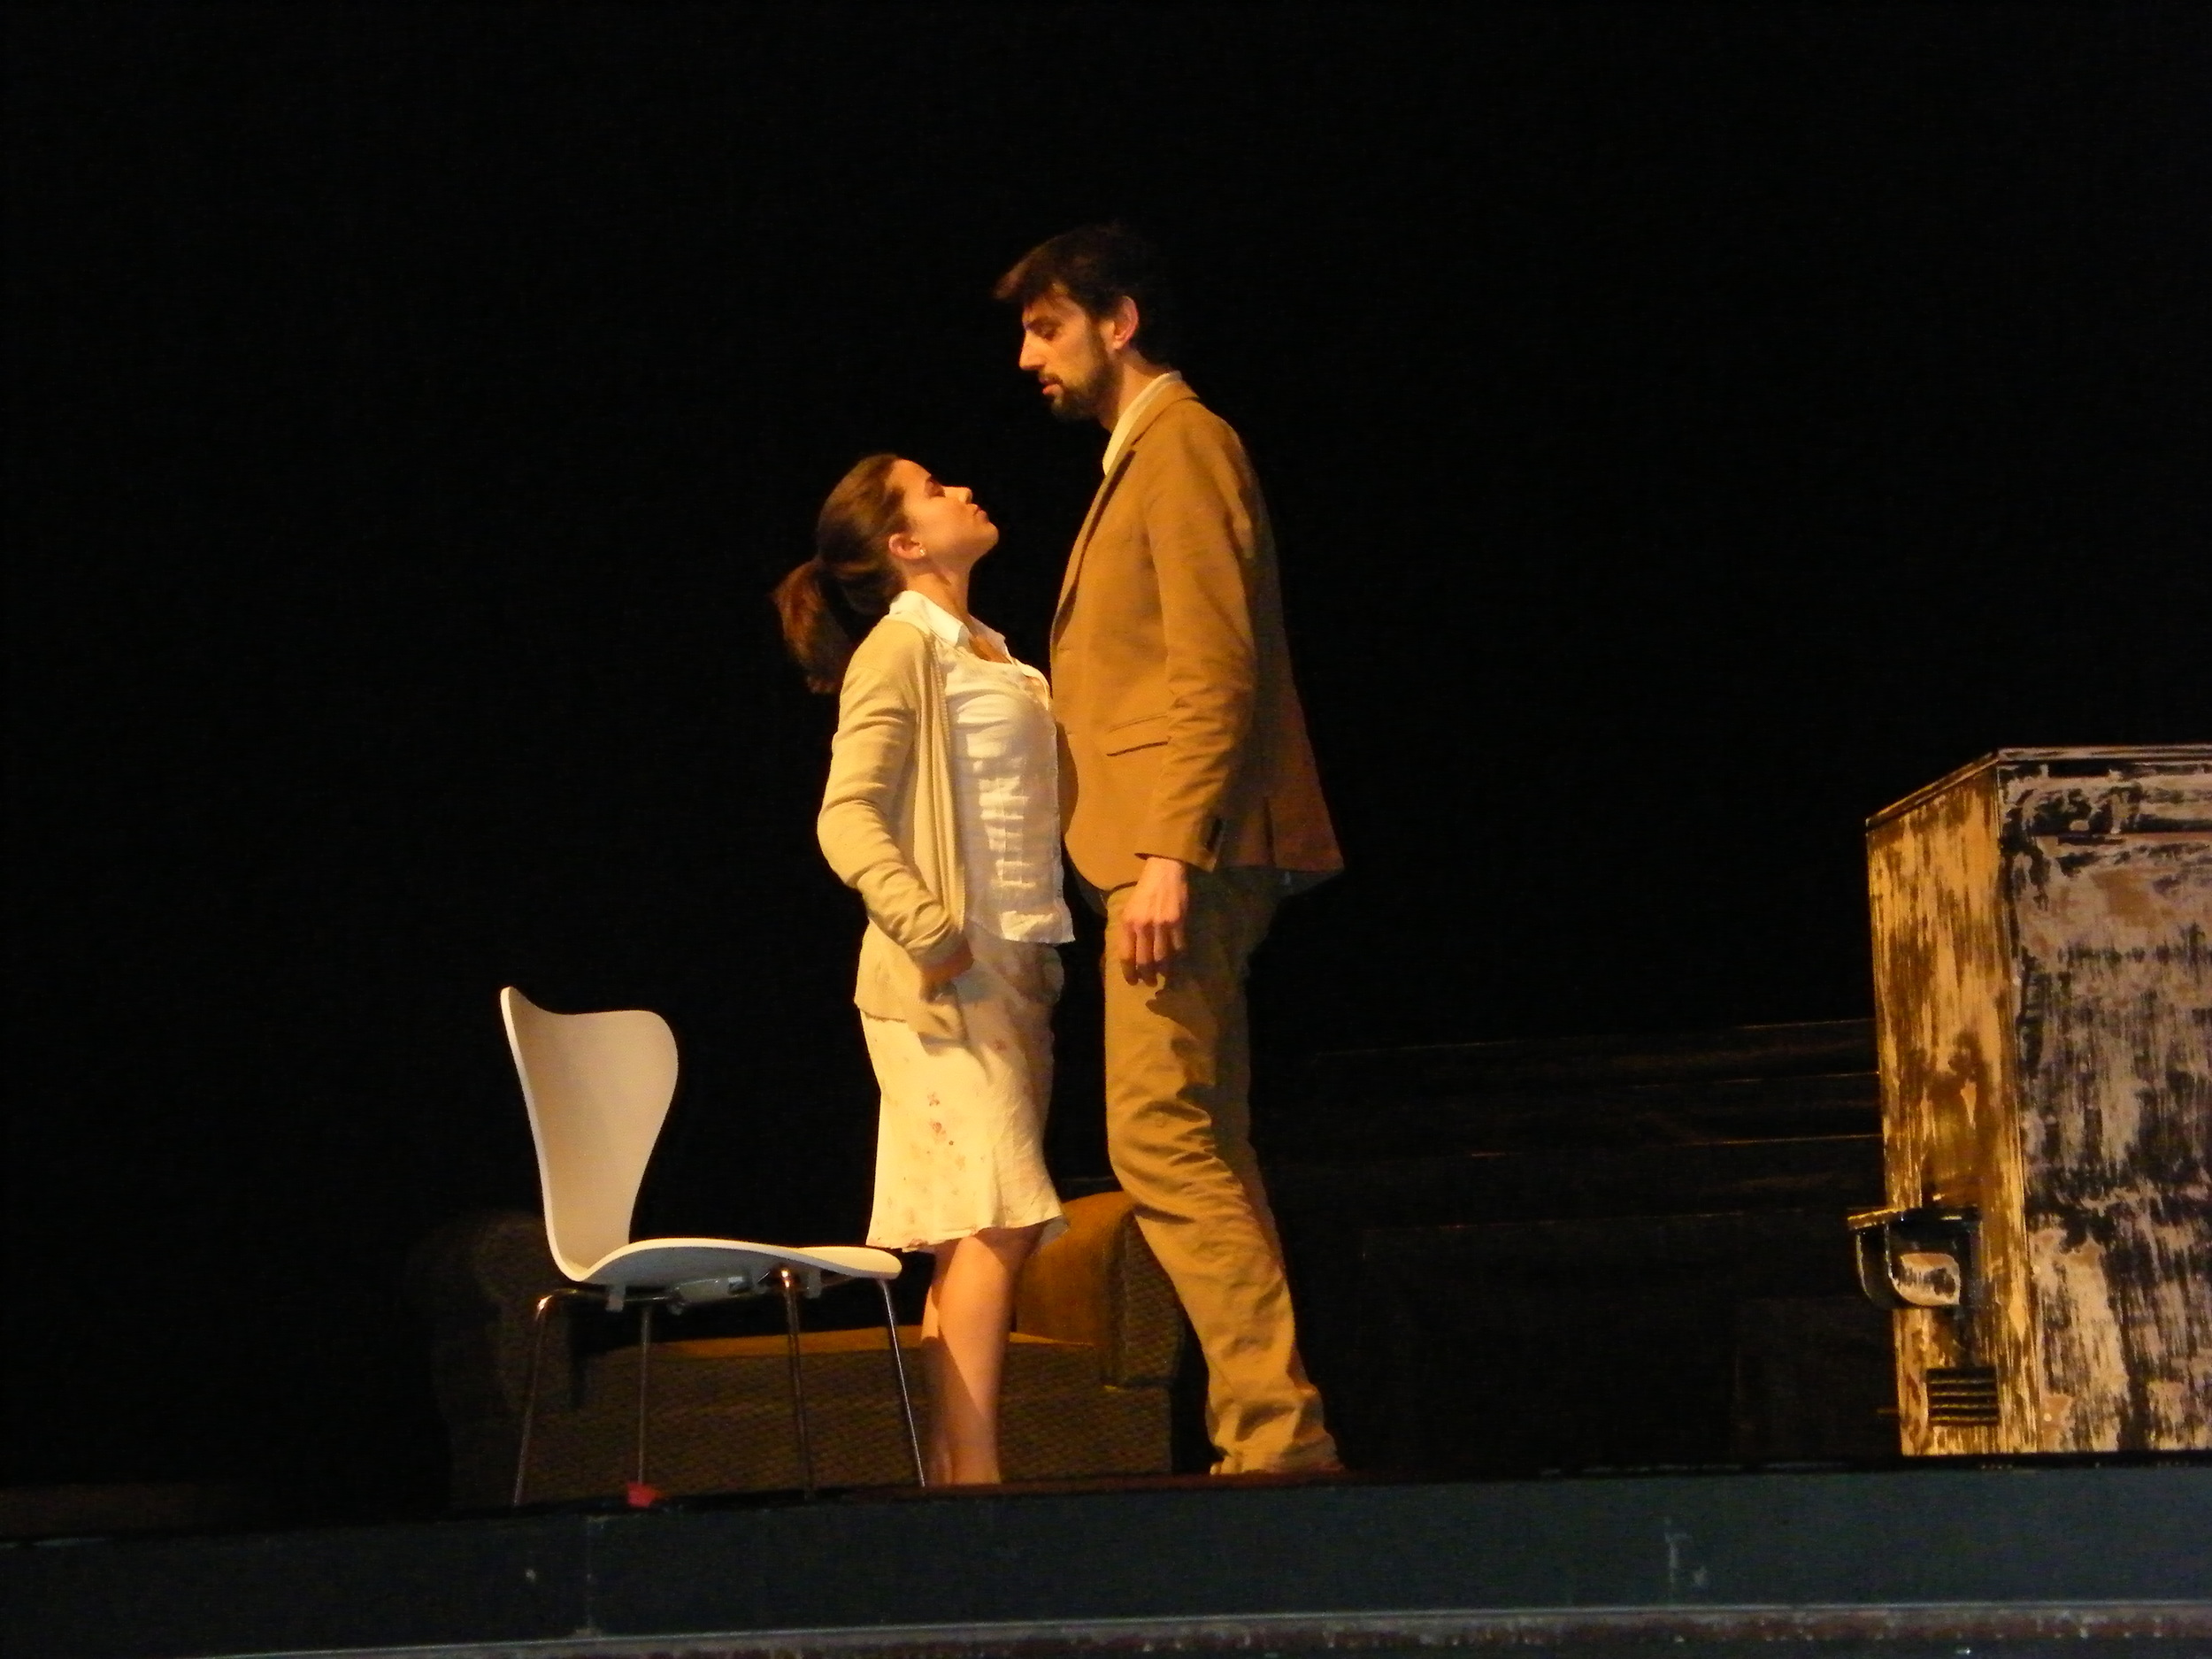 Dress rehearsel 'Le nozze di Figaro' - Susanna (Elsi Spanoghe) and Bartolo (Koen Vereertbrugghen) (November 2015)